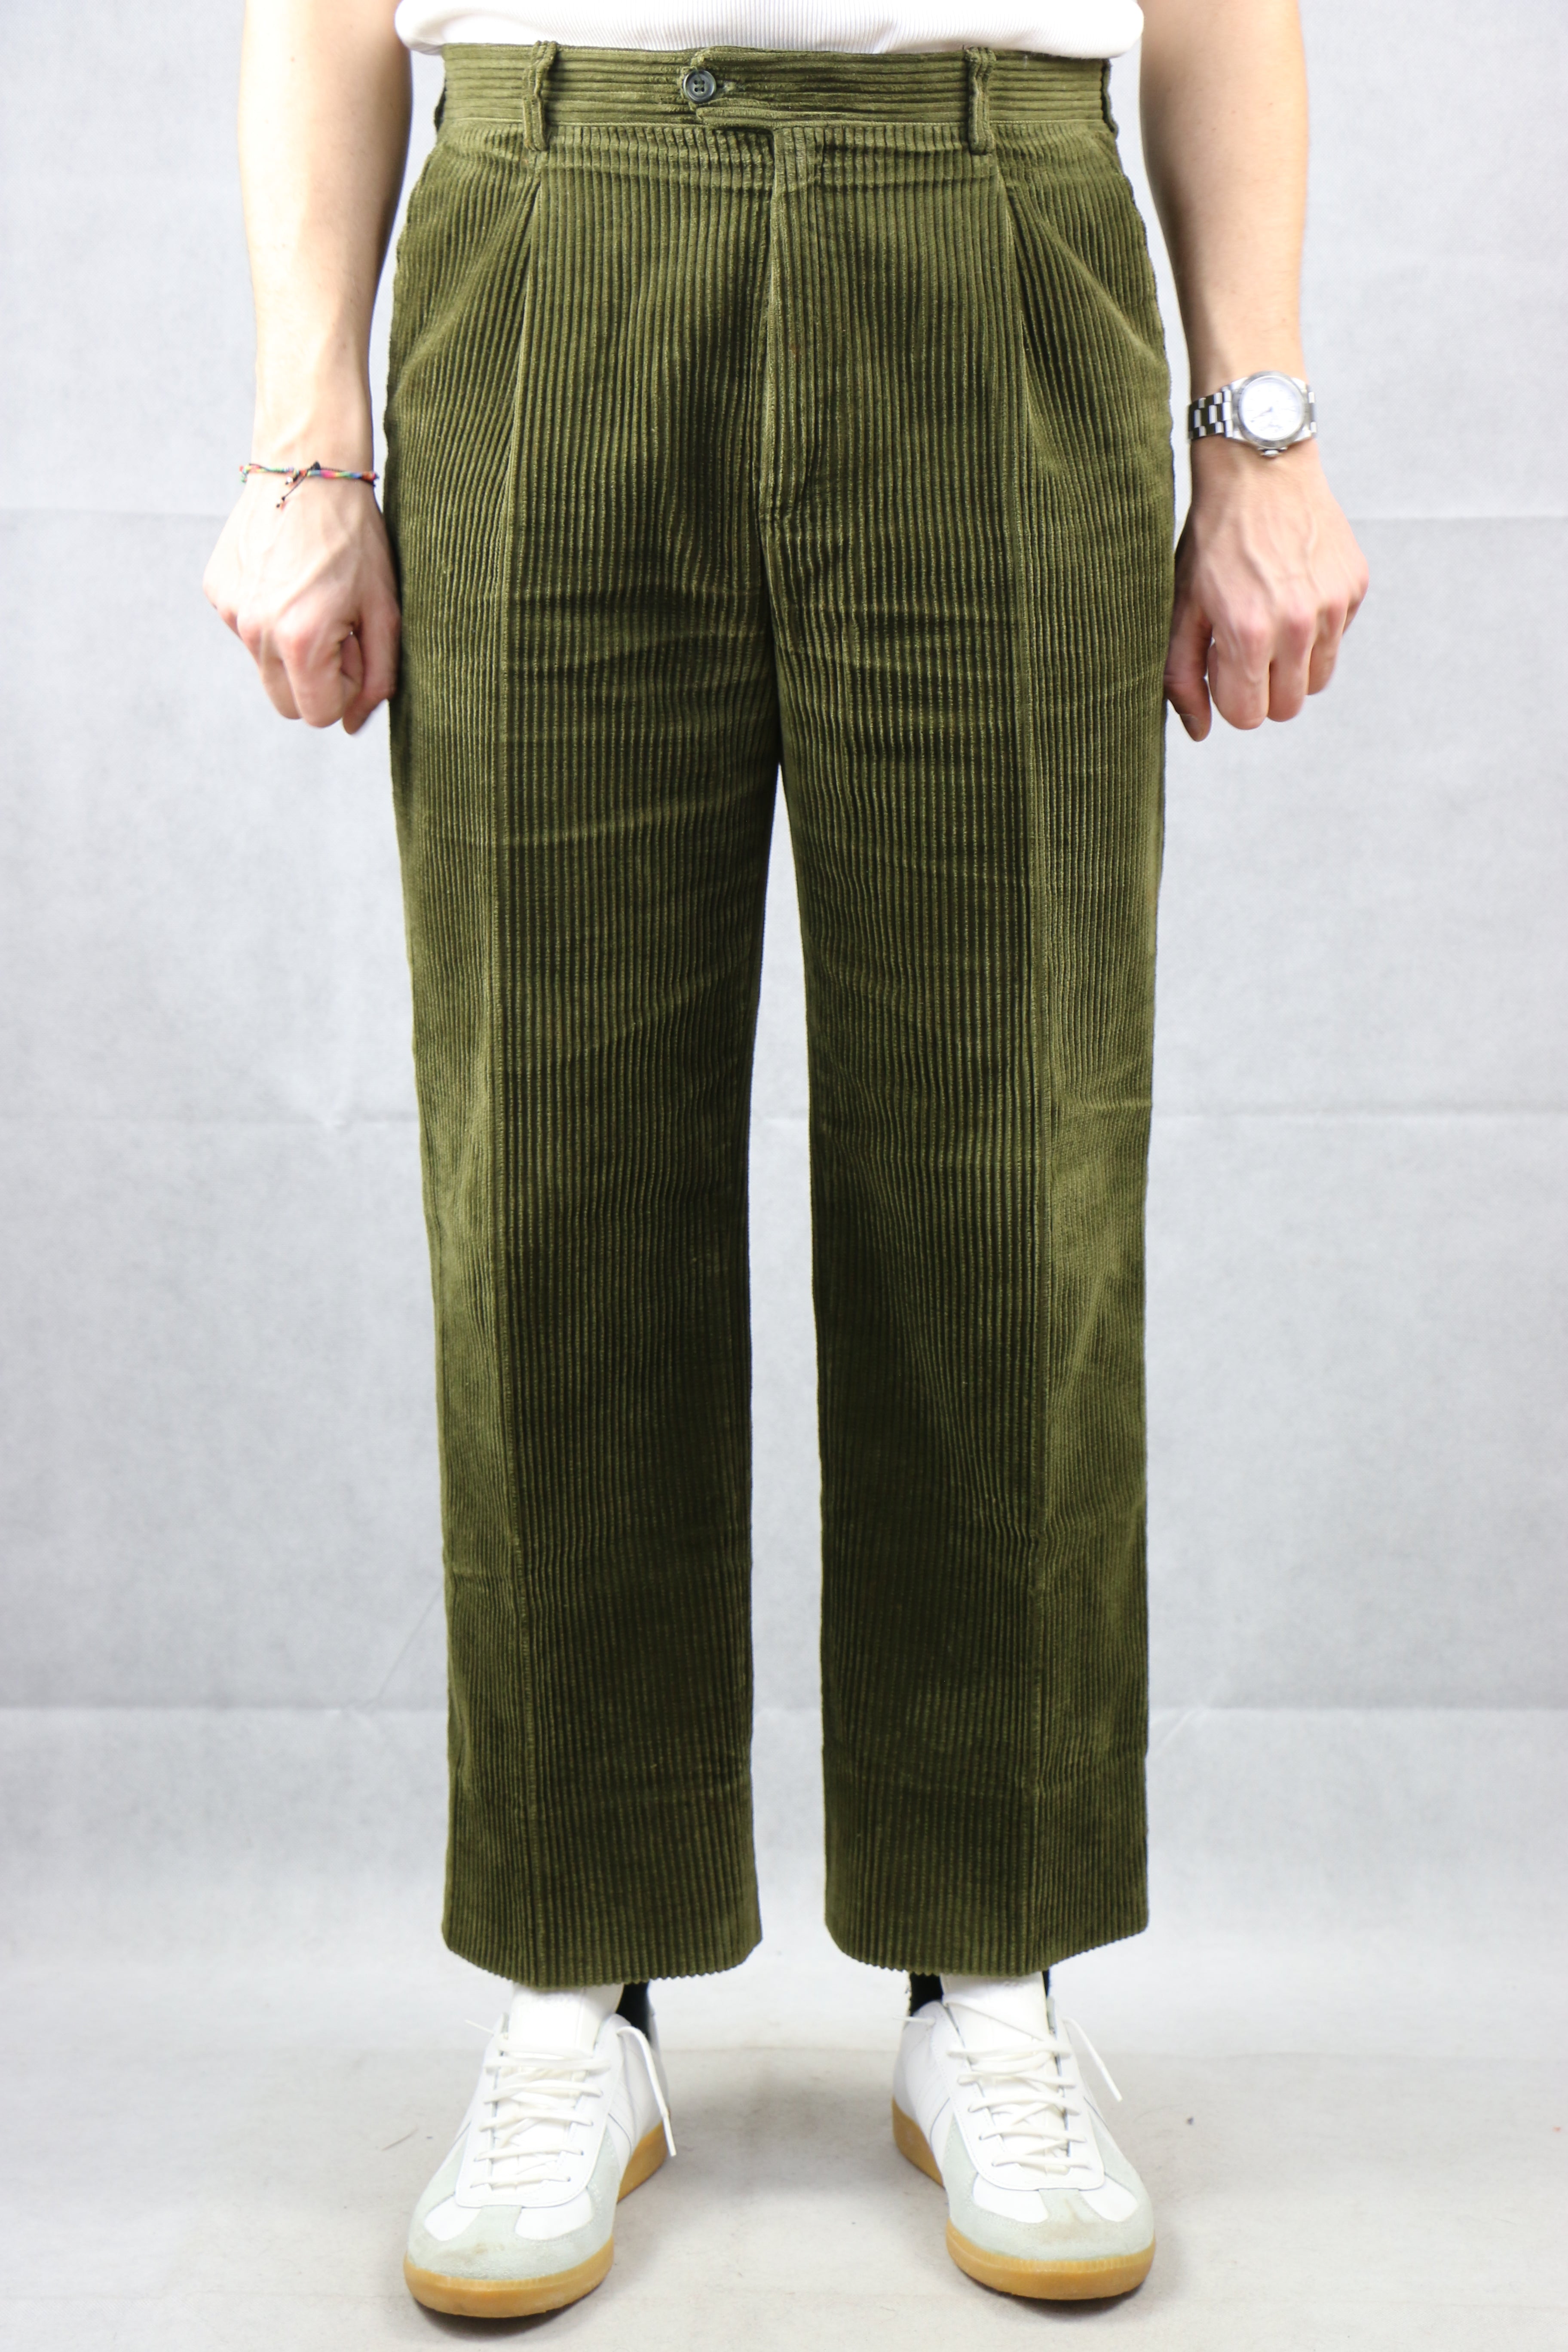 Vintage Corduroy Pants for Men ~ Clochard92.com